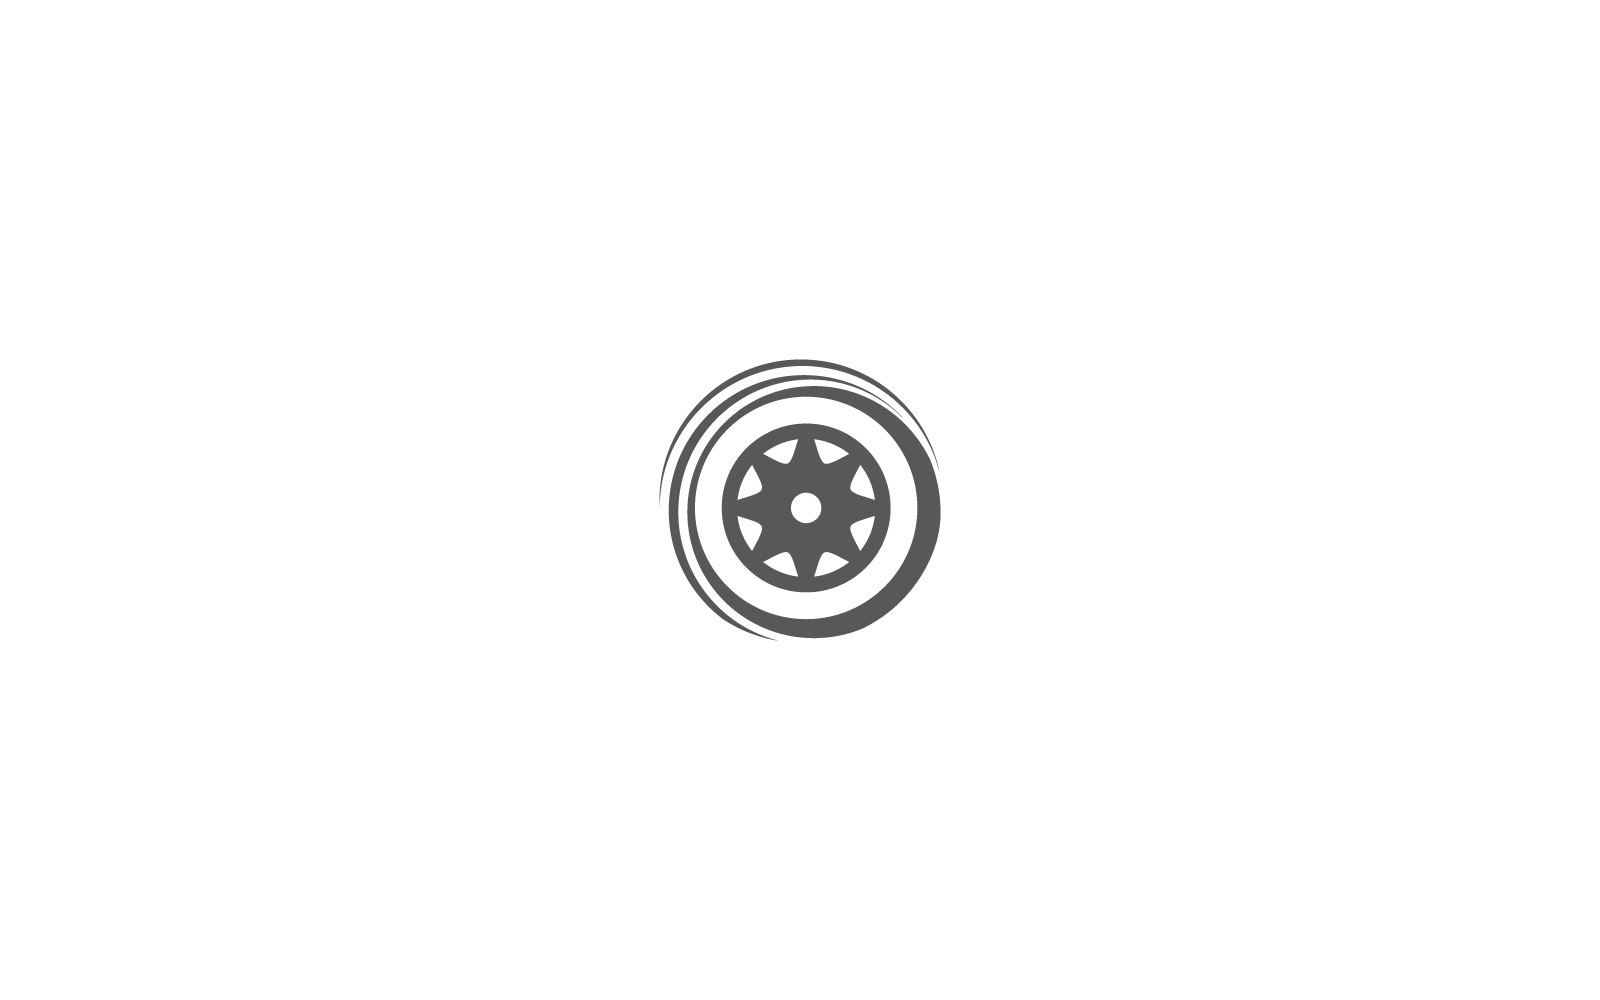 Tires illustration logo flat design template